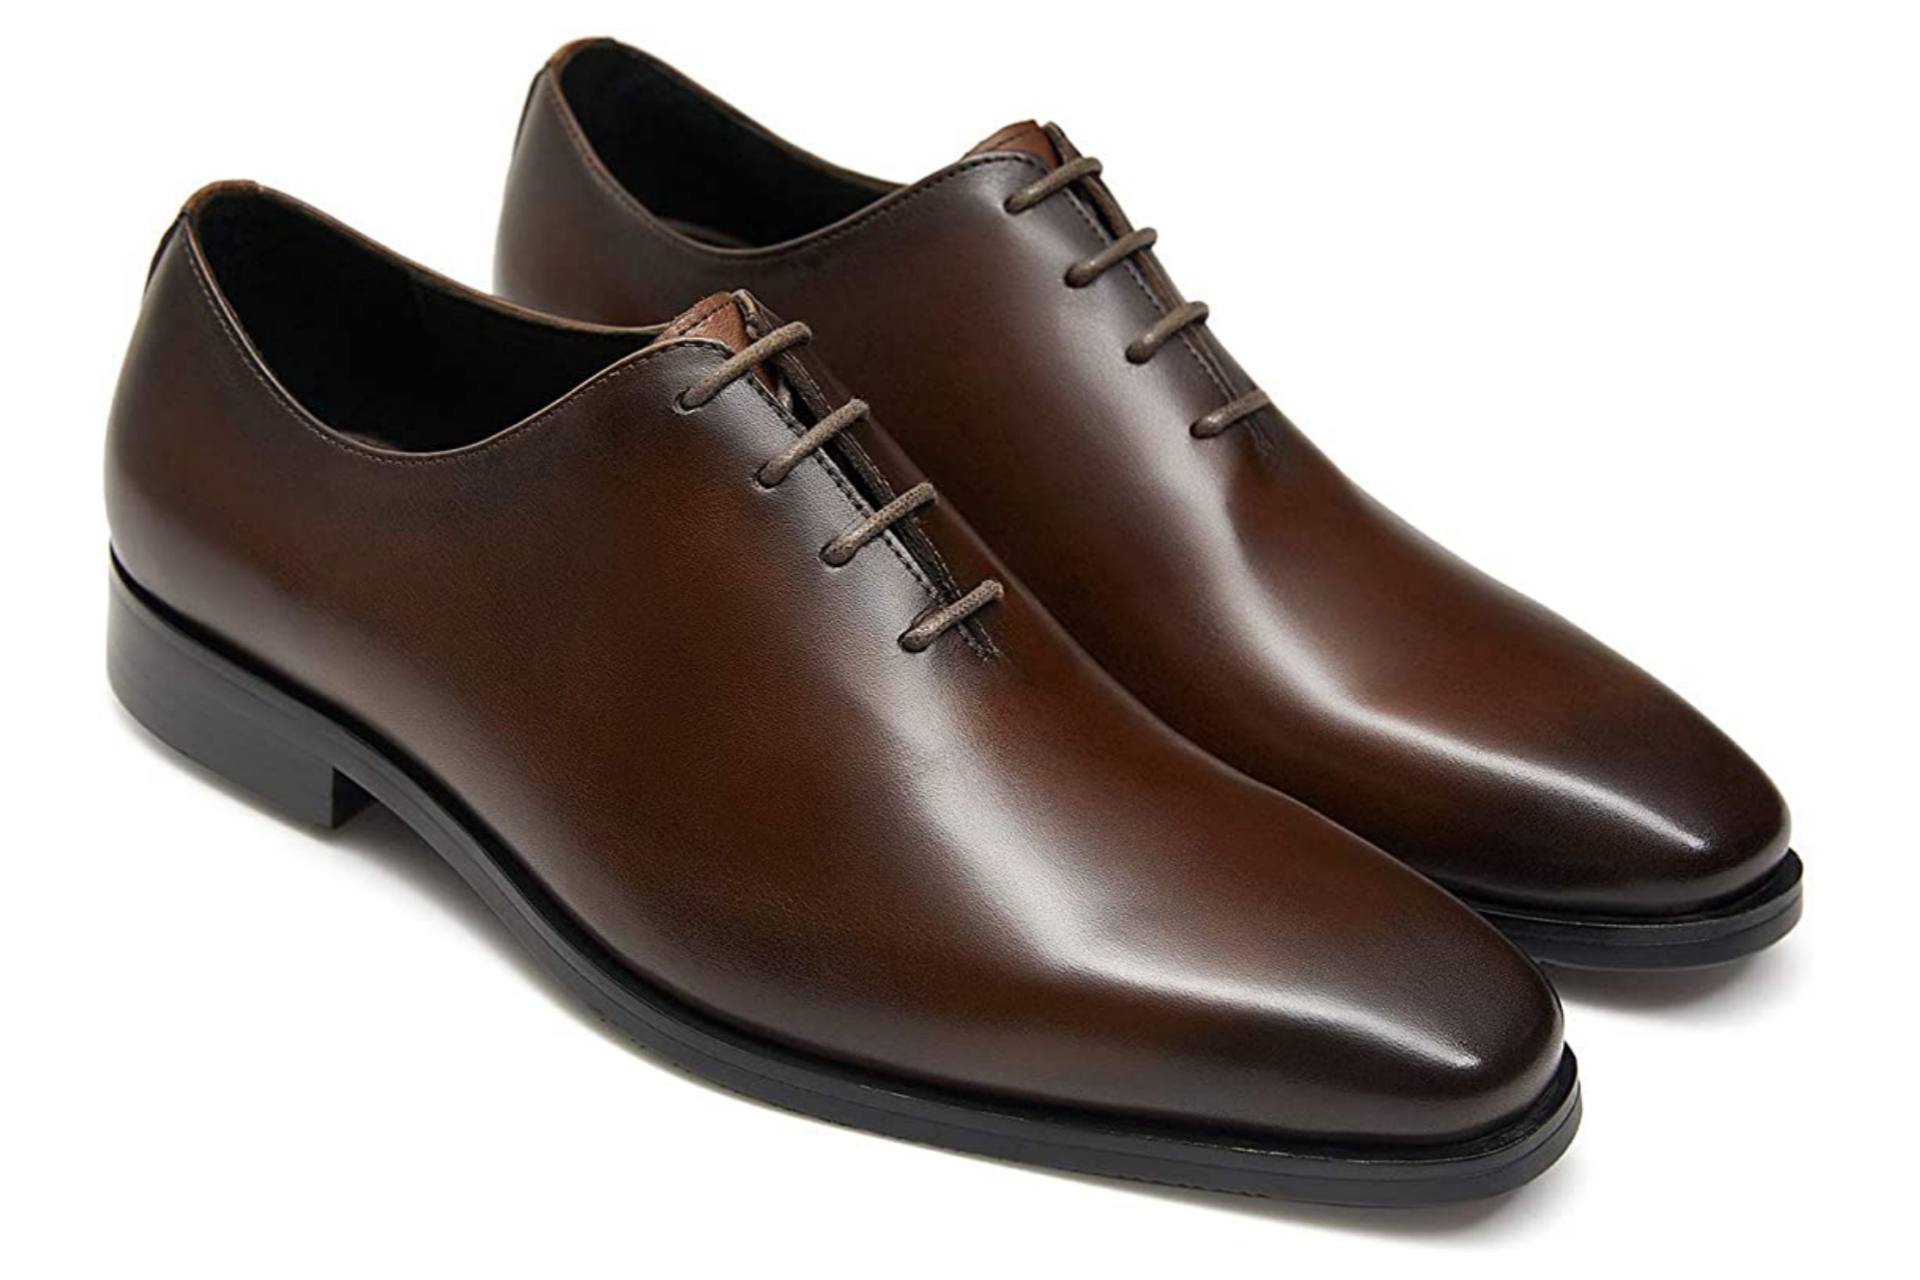 Best Oxford shoes for men